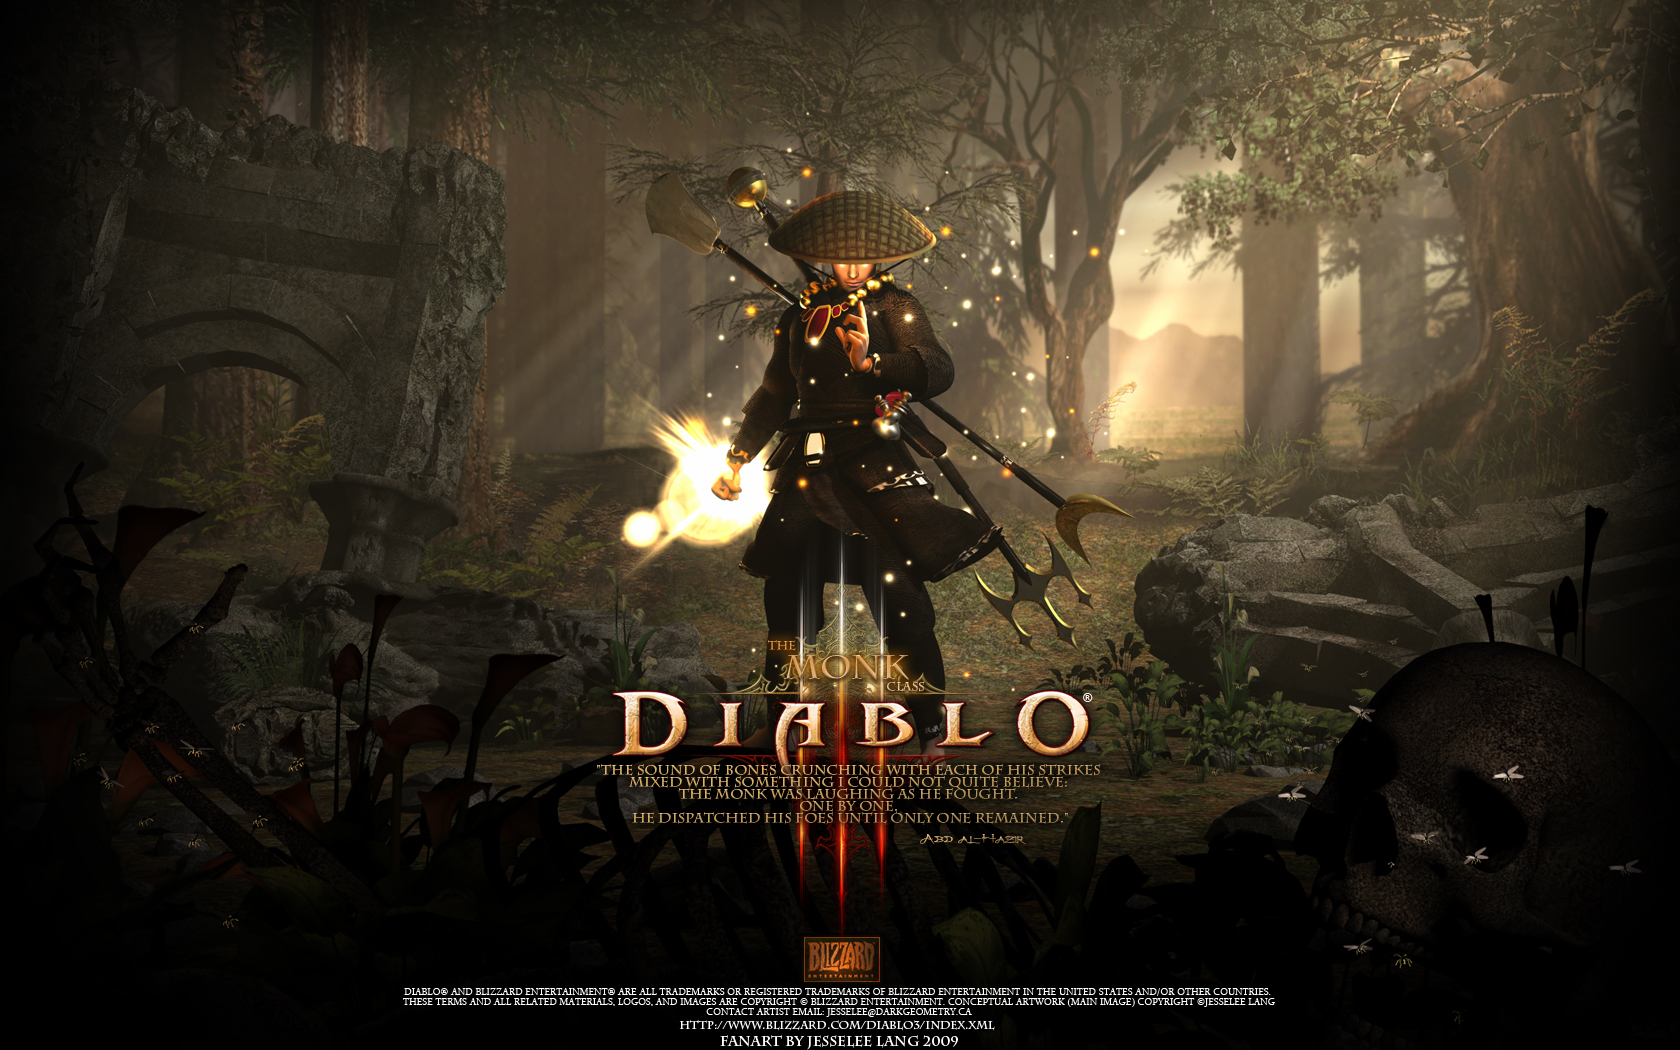 Diablo Monk Game Wallpaper Hd Download For Computer - Diablo 3 Monk Wallpaper Hd - HD Wallpaper 